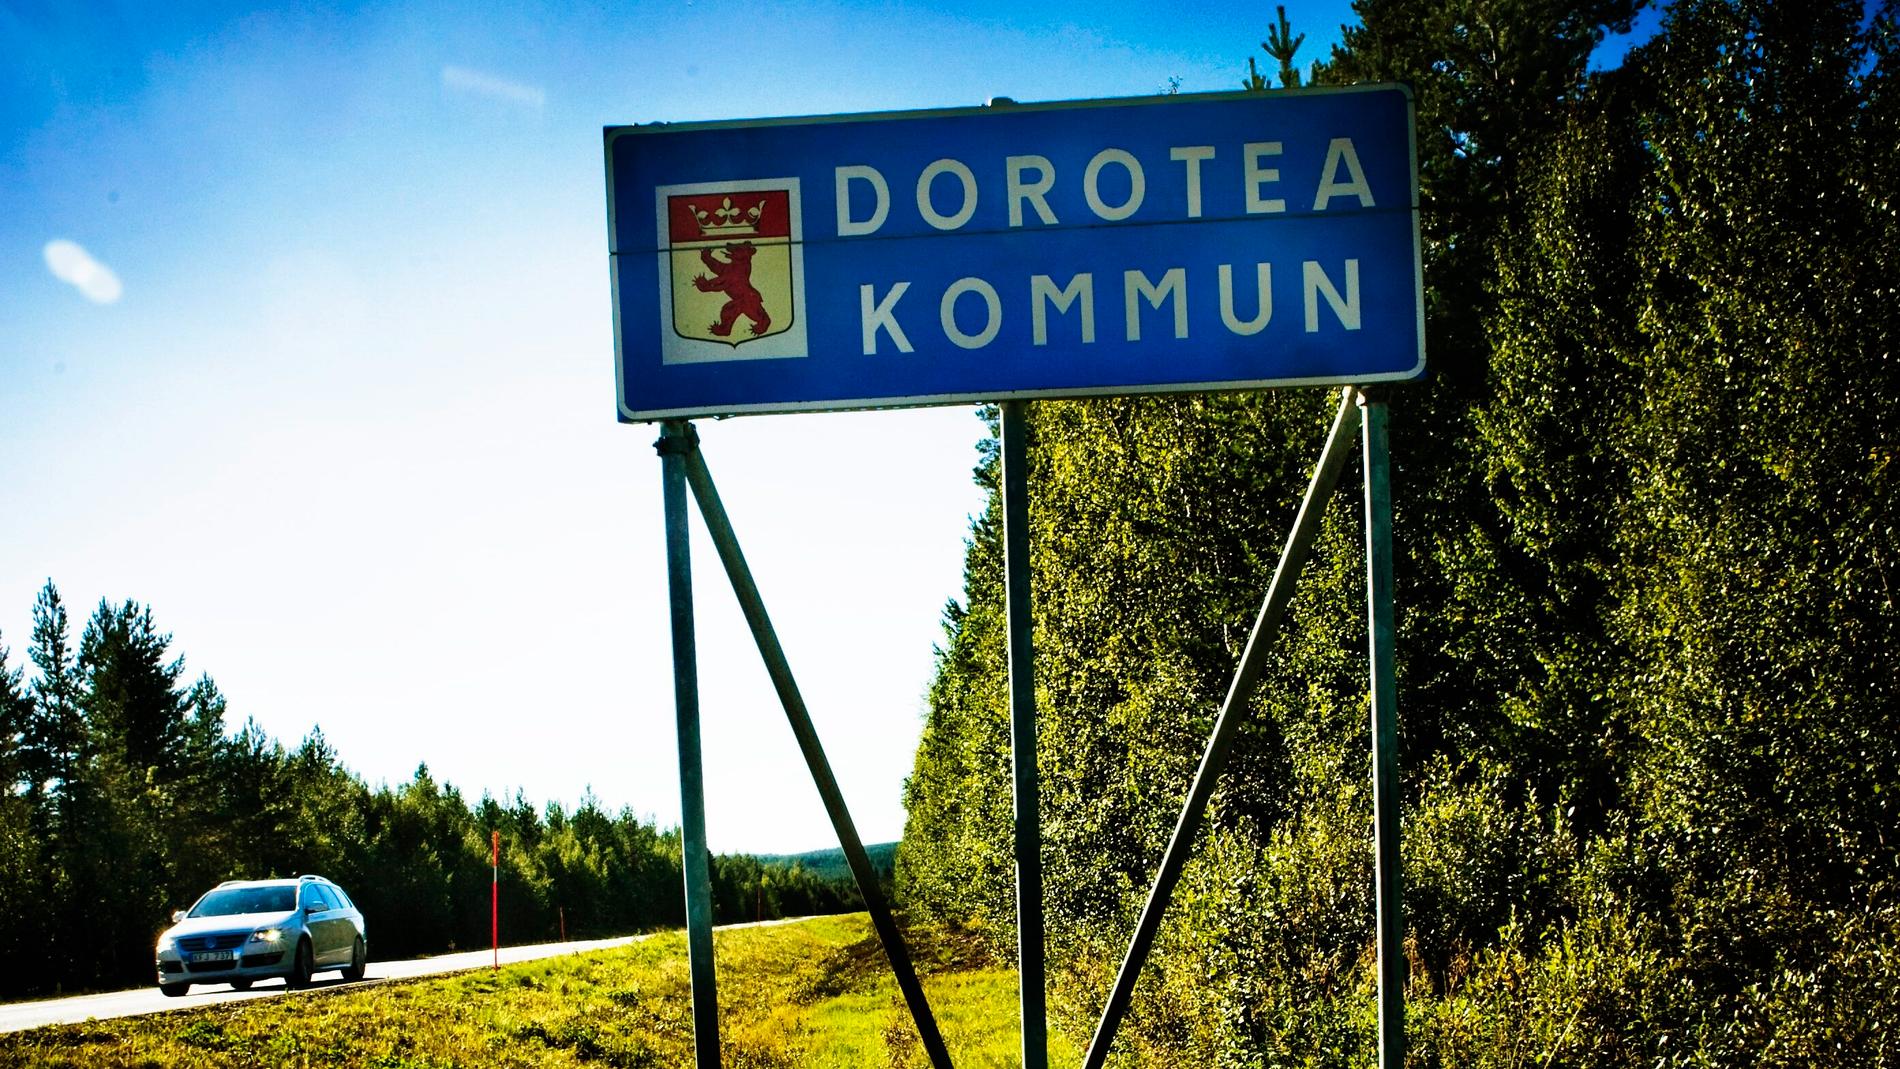 Dorotea kommun har blivit minst i Sverige. Arkivbild.